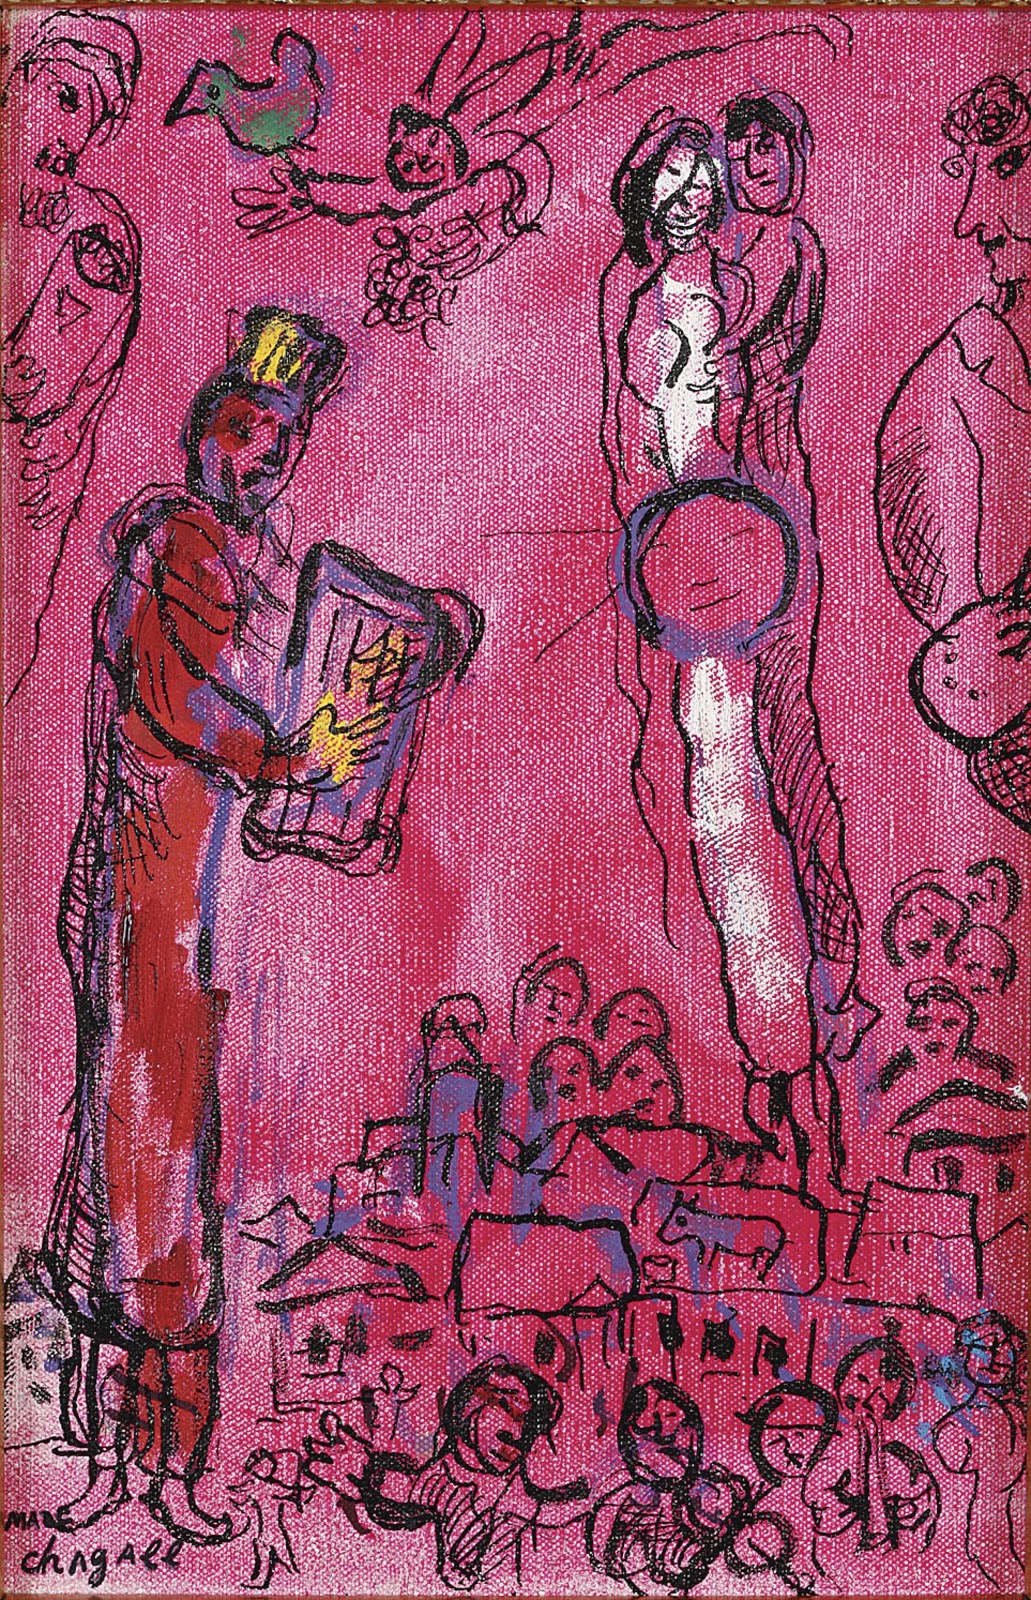 Marc+Chagall-1887-1985 (419).jpg